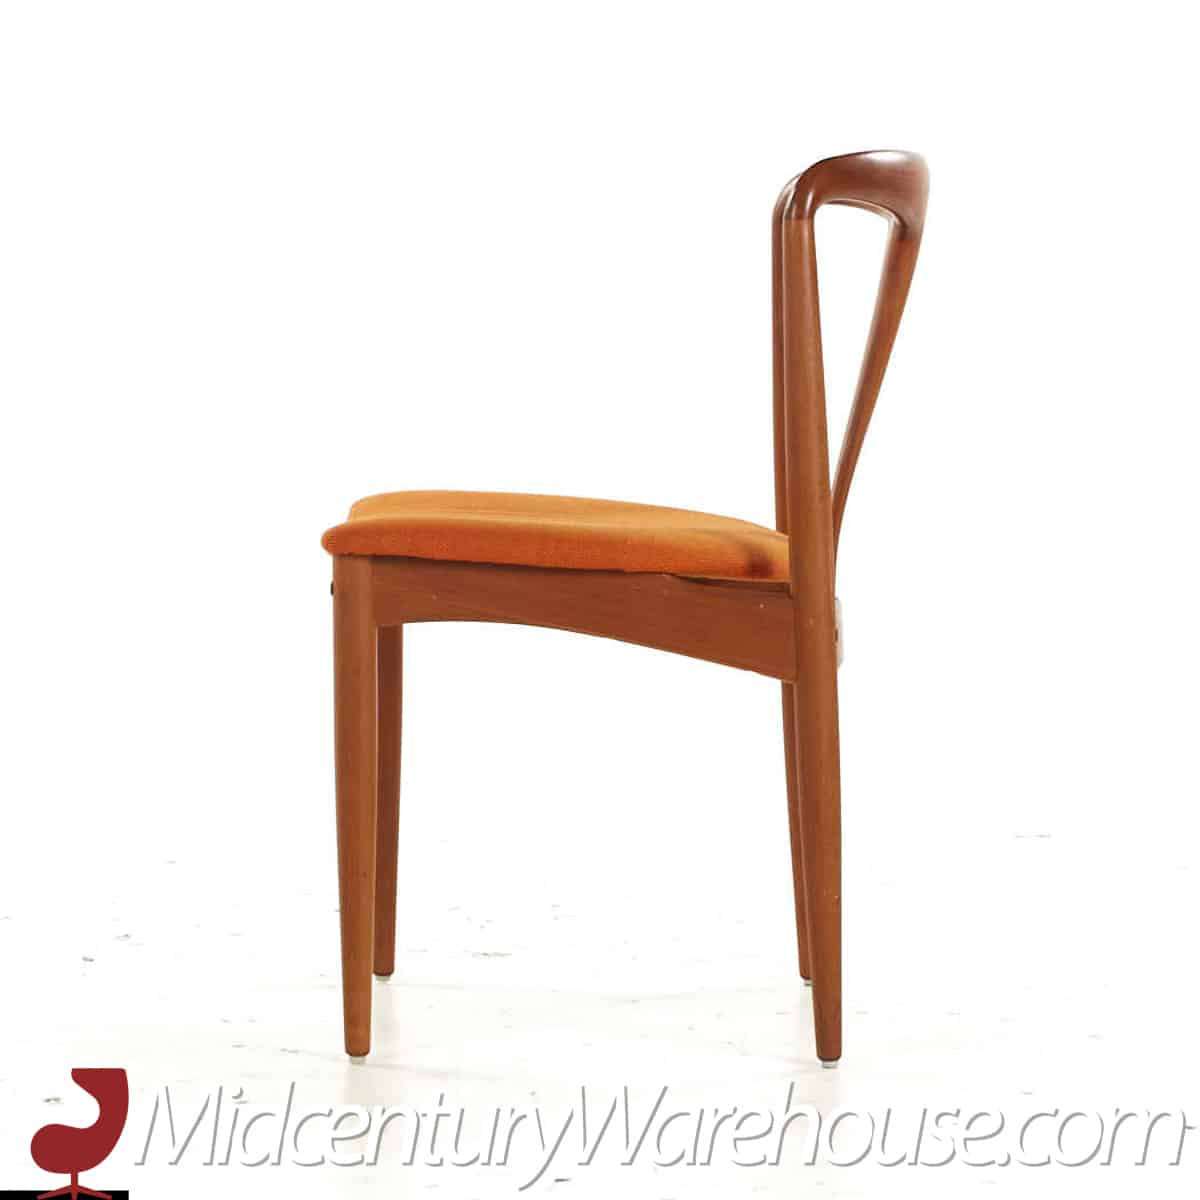 Johannes Andersen for Uldum Mobelfabrik Mid Century Teak Juliane Chairs – Set of 4